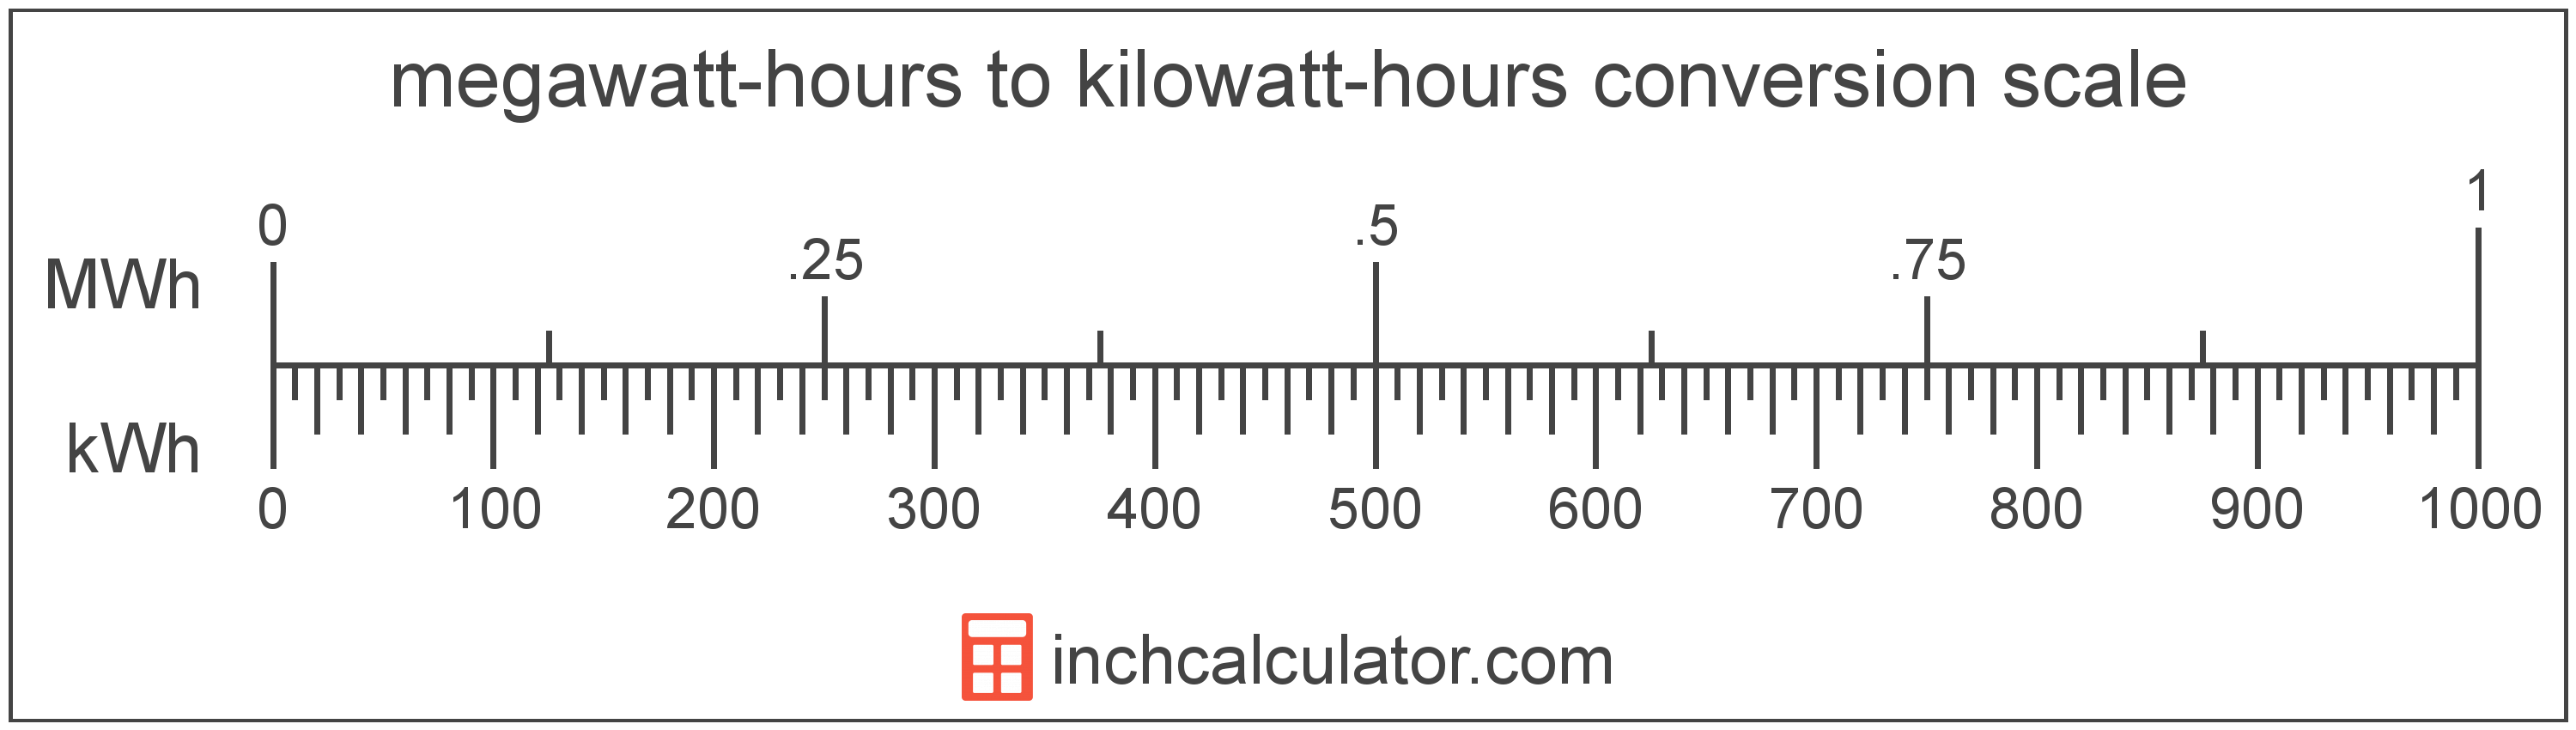 conversion scale showing kilowatt-hours and equivalent megawatt-hours energy values